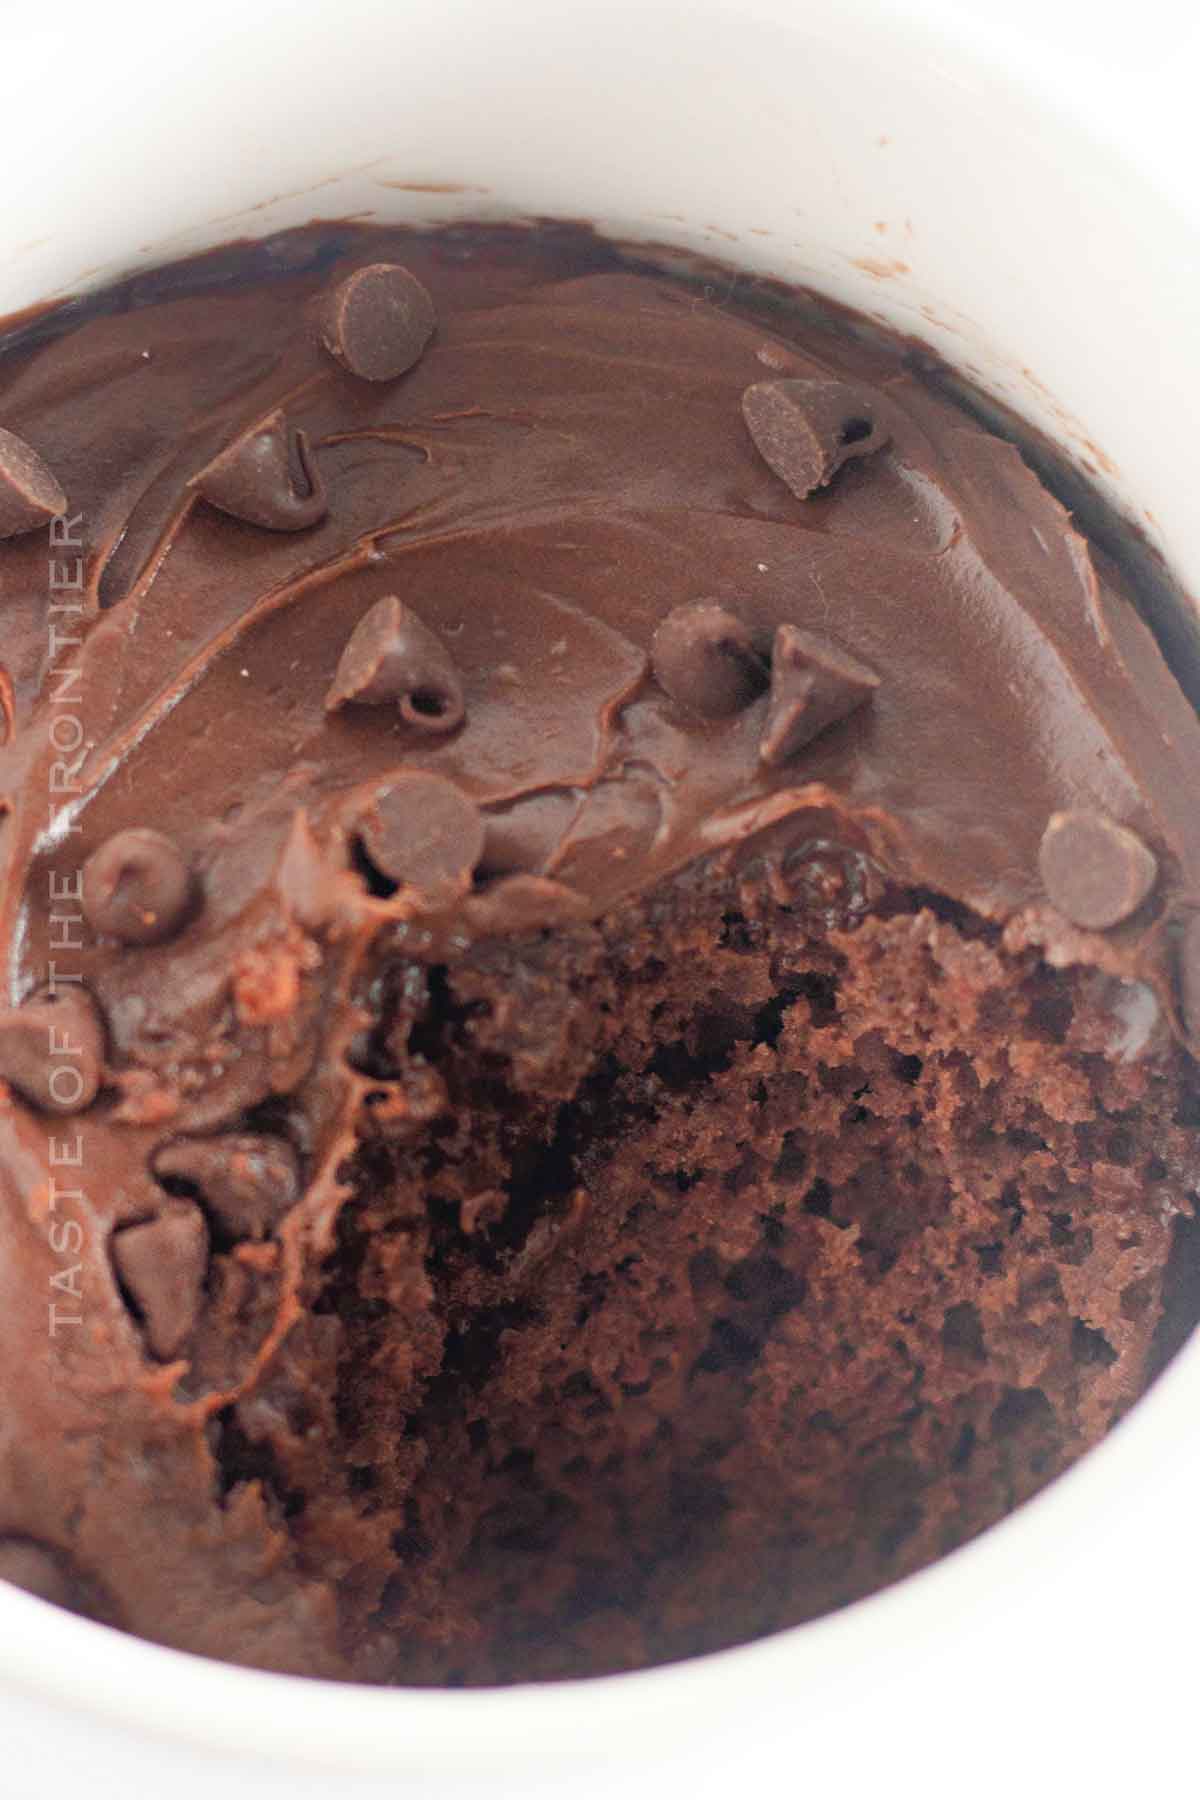 Chocolate chip cake in a mug